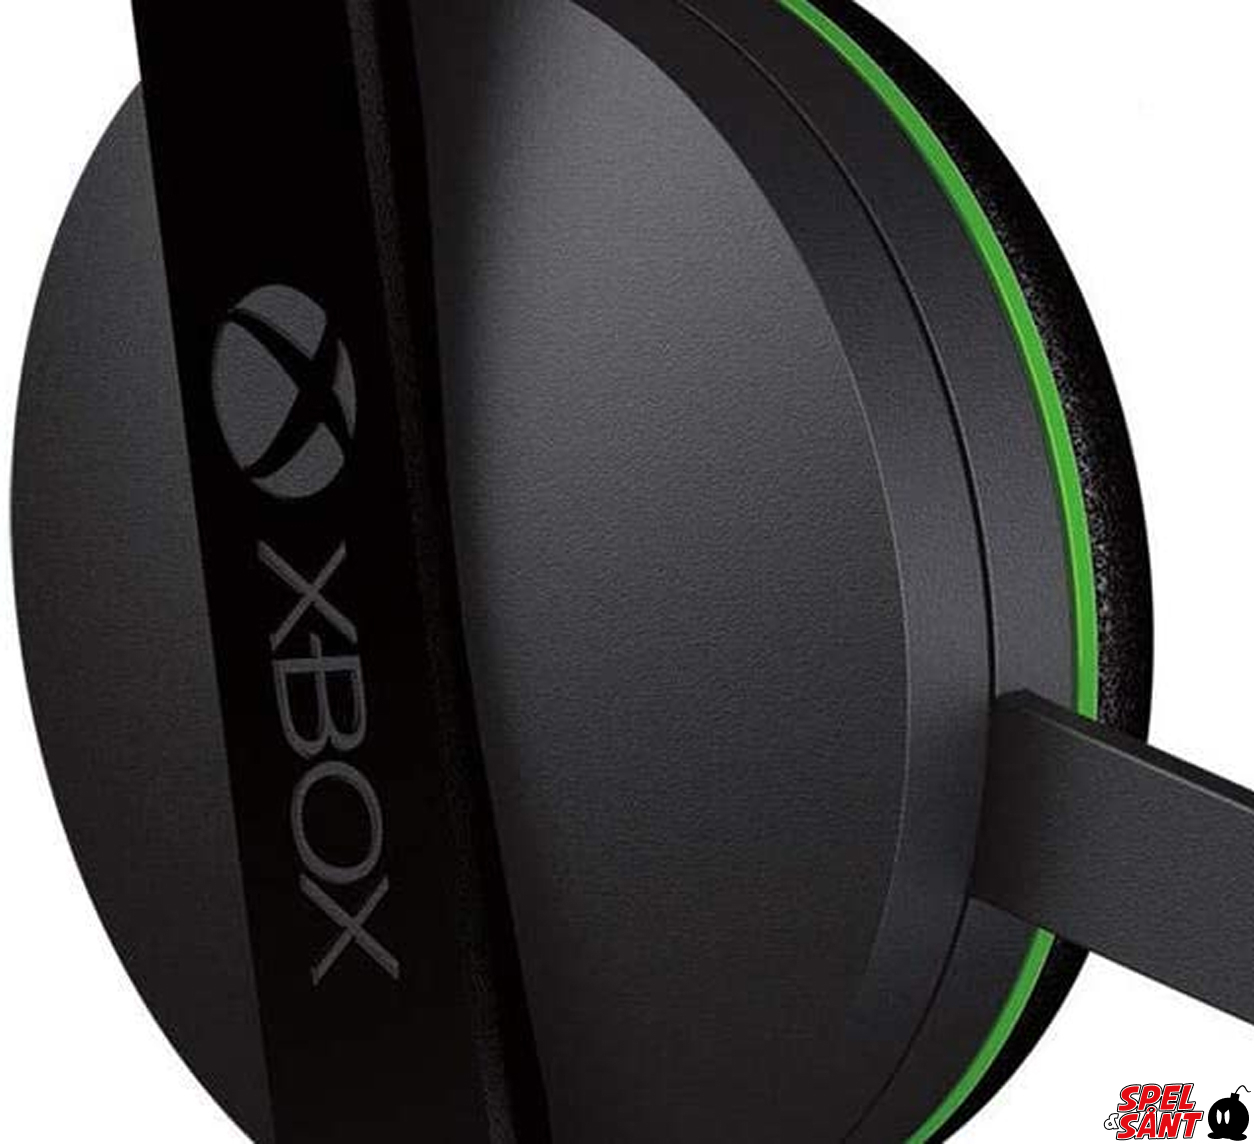 Купить наушники xbox с микрофоном. Xbox one проводная гарнитура - chat Headset (s5v-00012). Microsoft Xbox наушники. Наушники для Xbox one s. Наушники Майкрософт для Xbox.